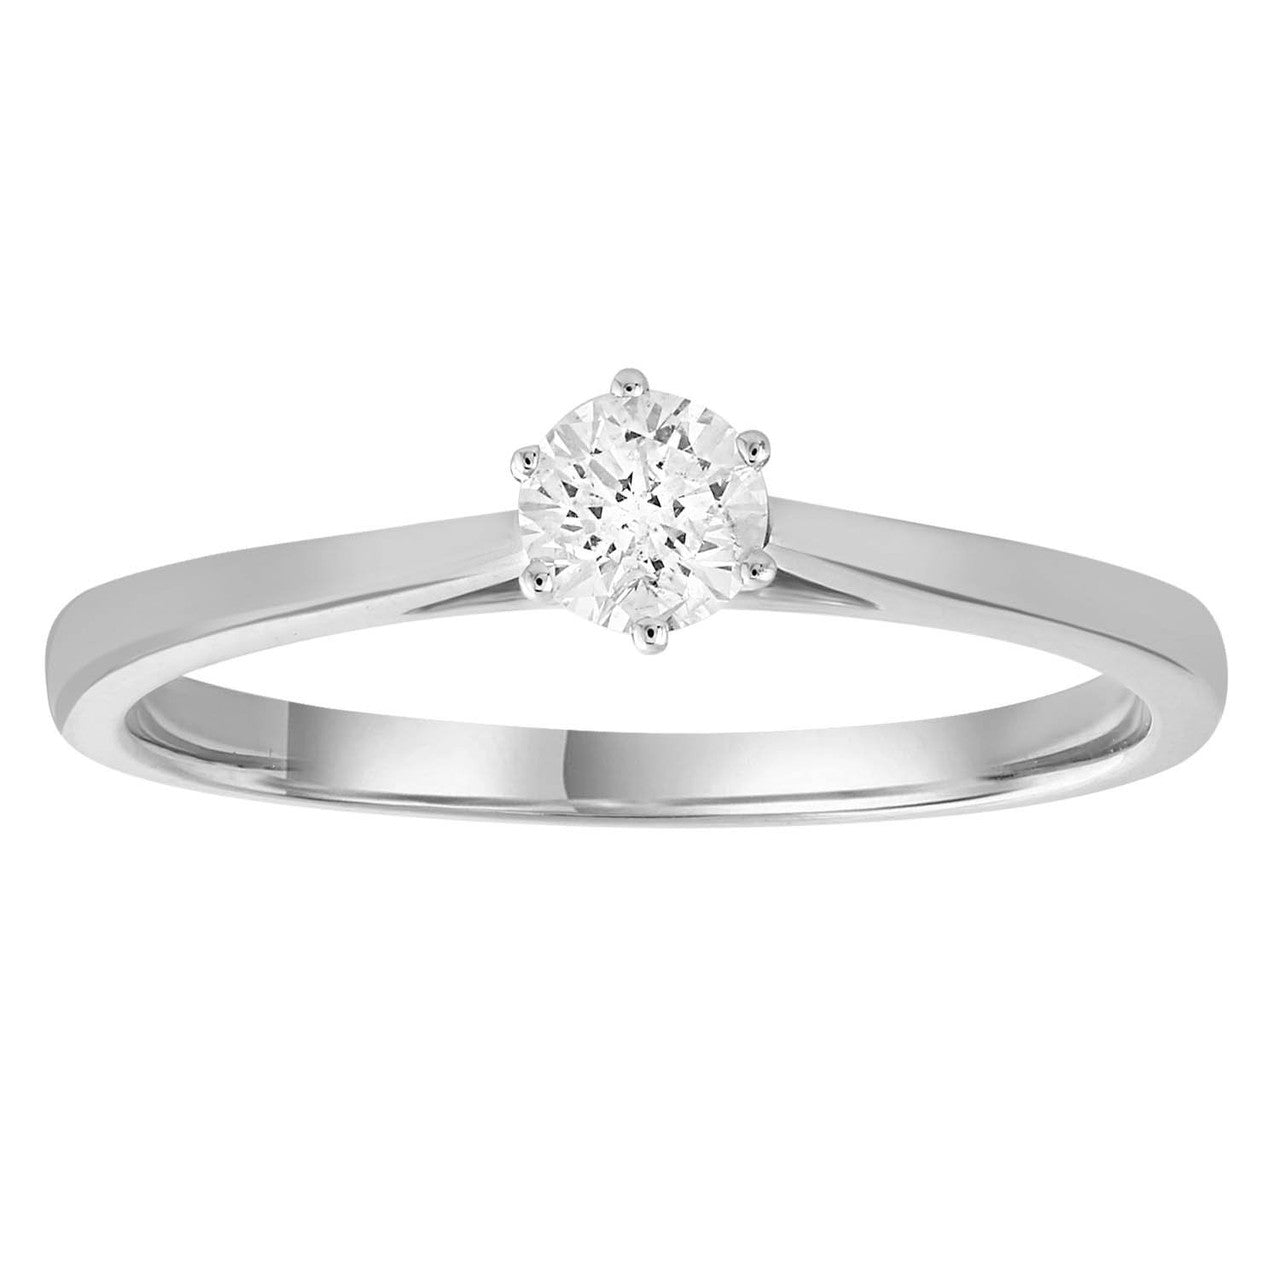 Ice Jewellery Solitaire Ring with 0.25ct Diamonds in 9K White Gold -  IGR-38249-025-W | Ice Jewellery Australia